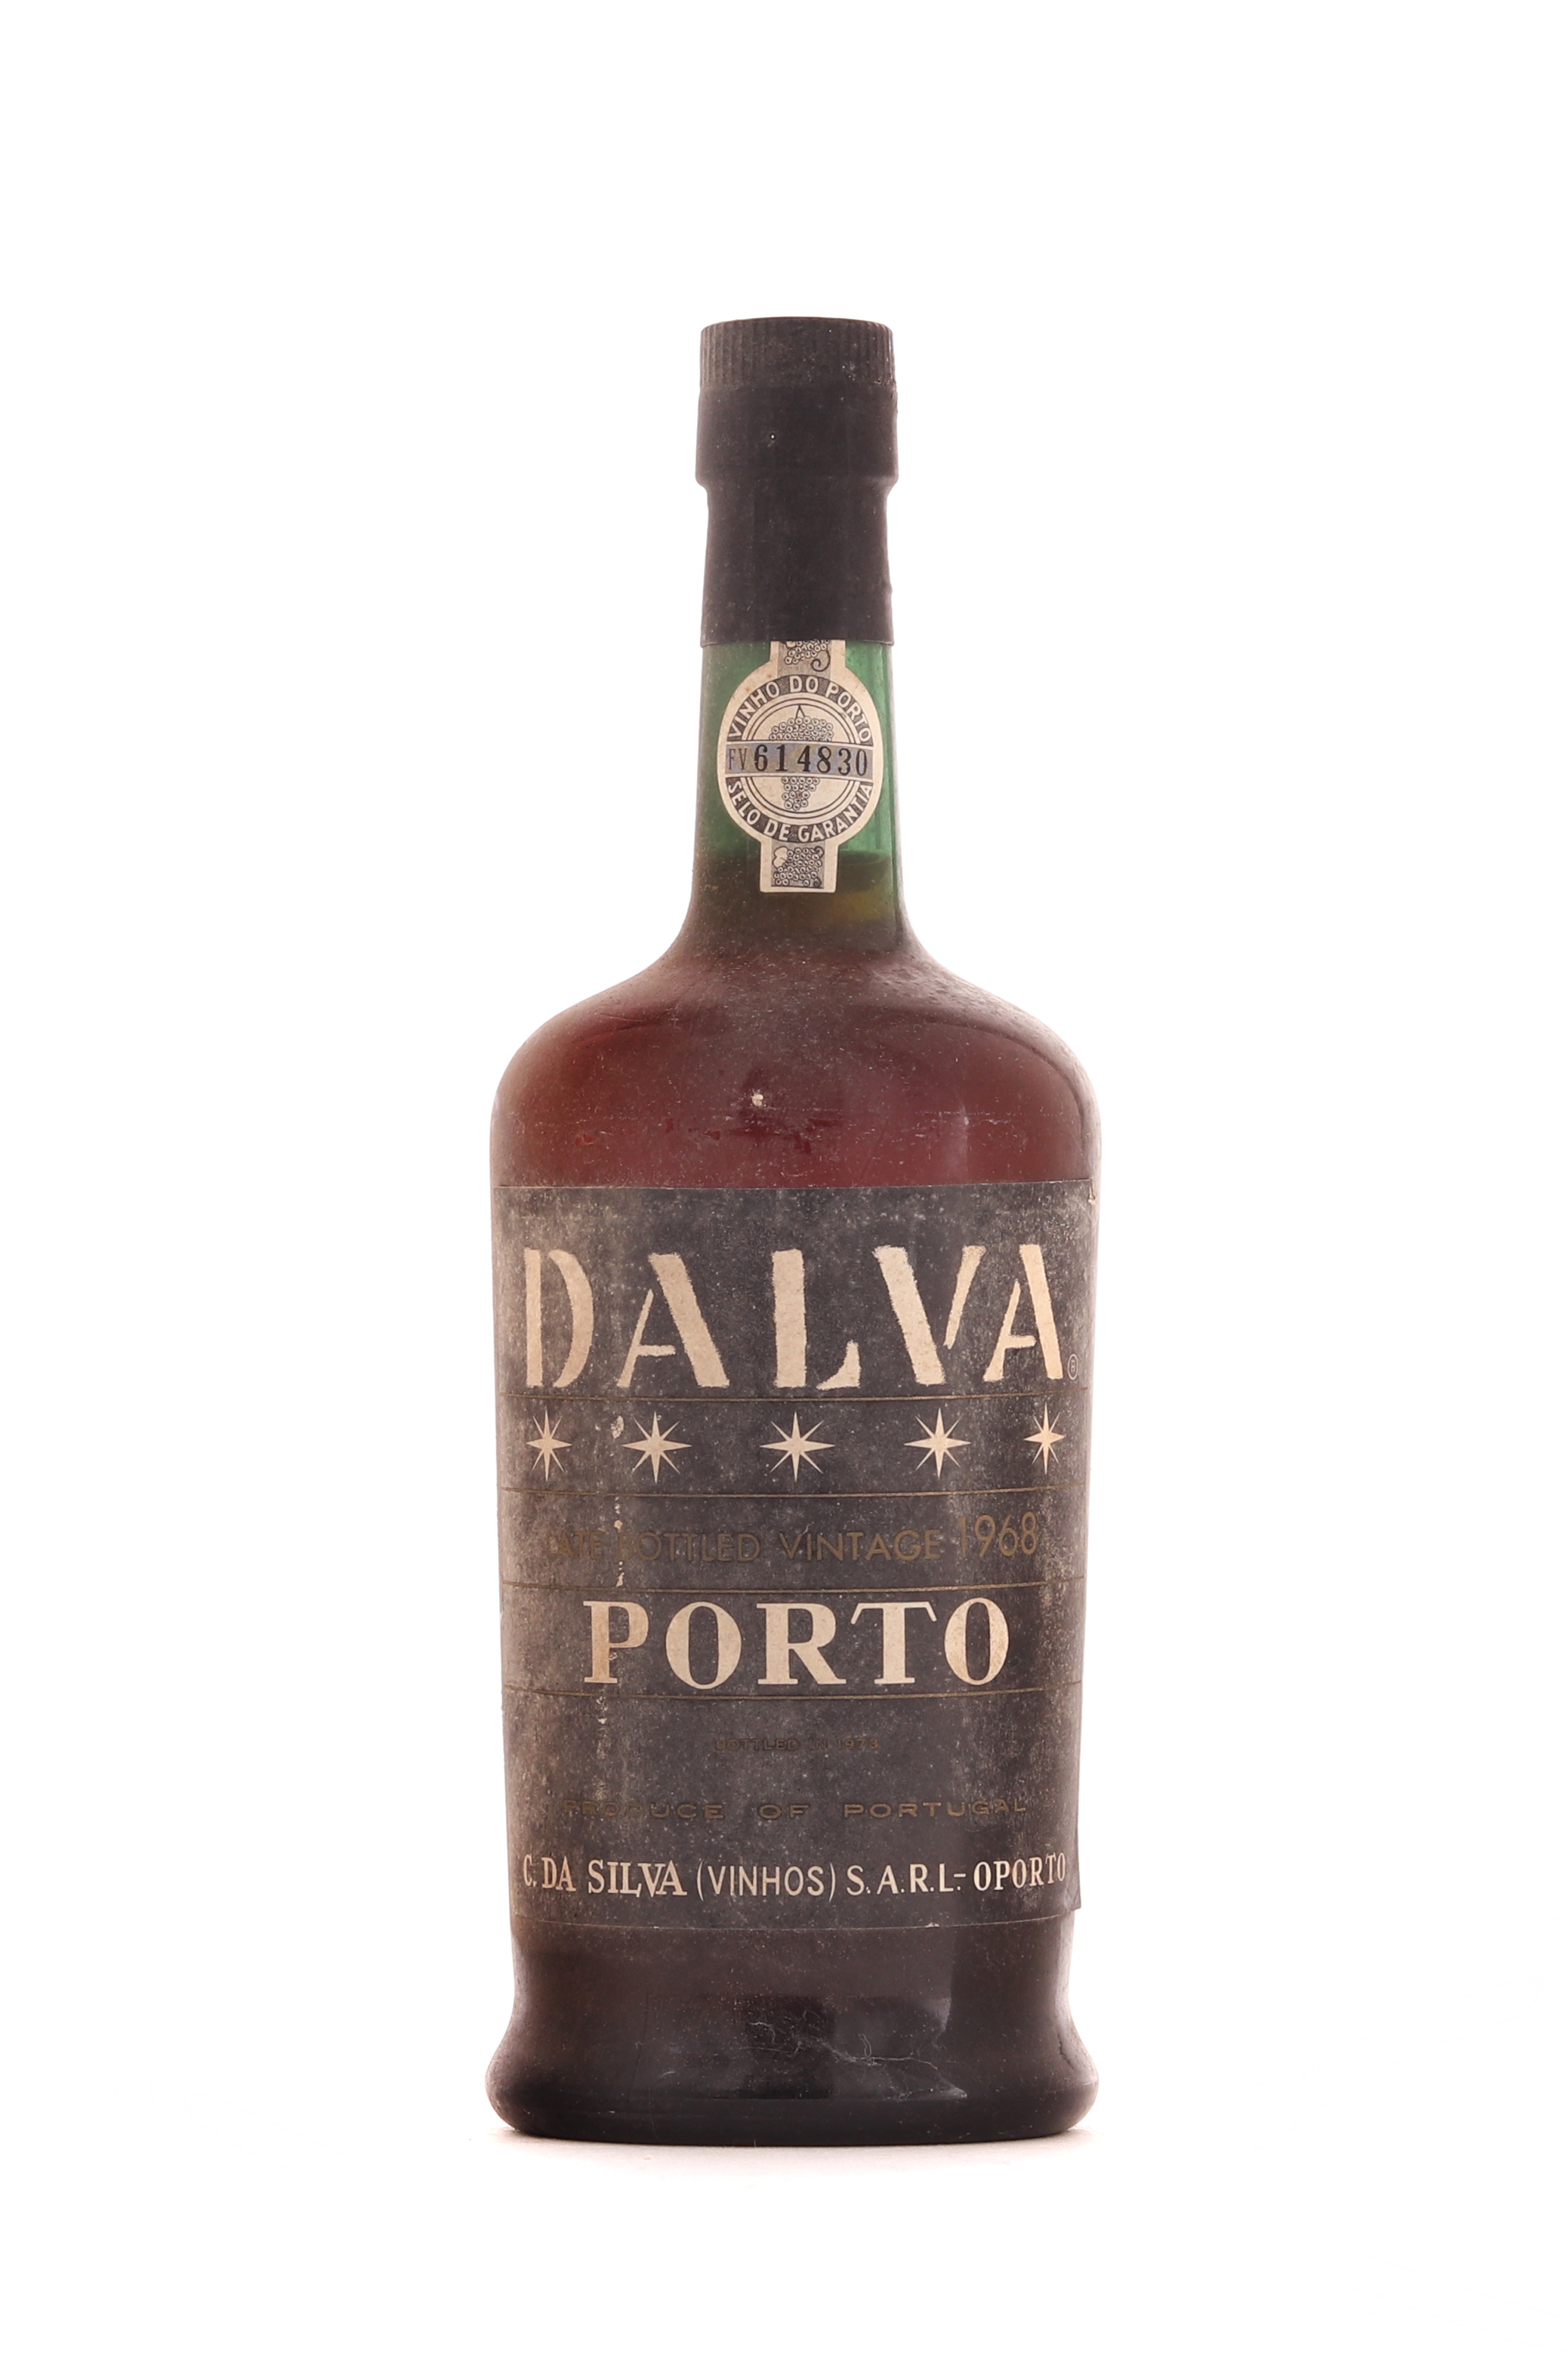 DALVA, Late Bottled Vintage 1968